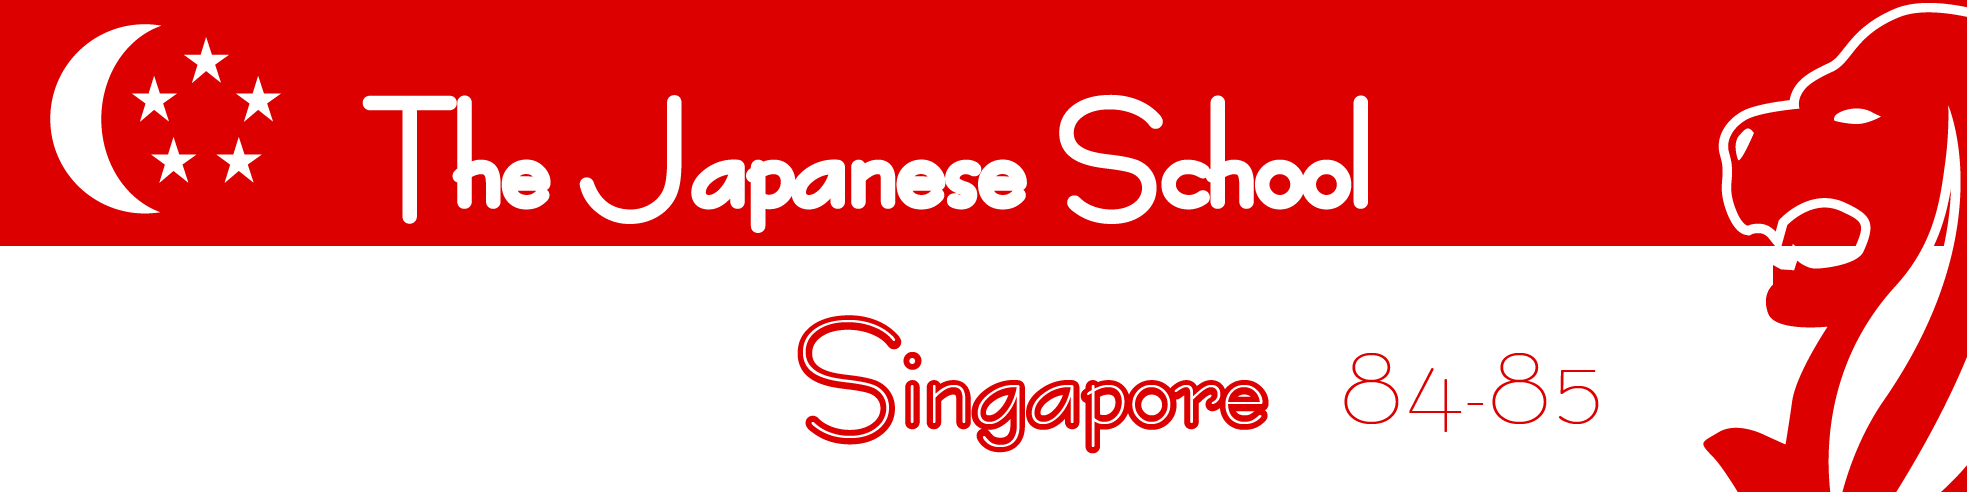 The Japanese School Singapore 84-85